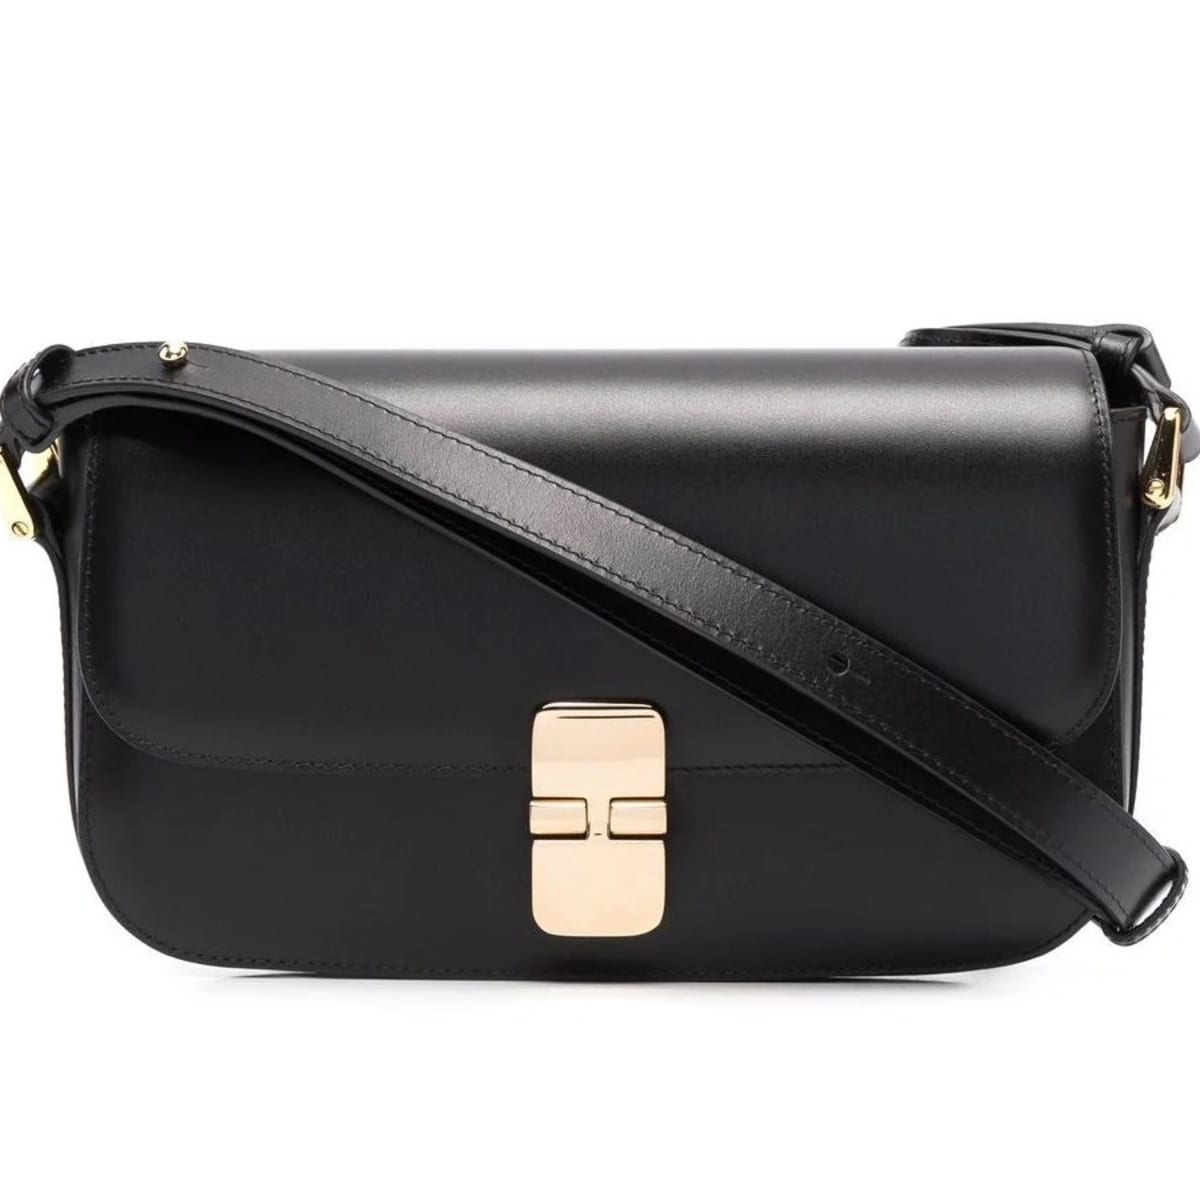 Need Help Choosing - A.P.C. Small Grace Bag : r/handbags